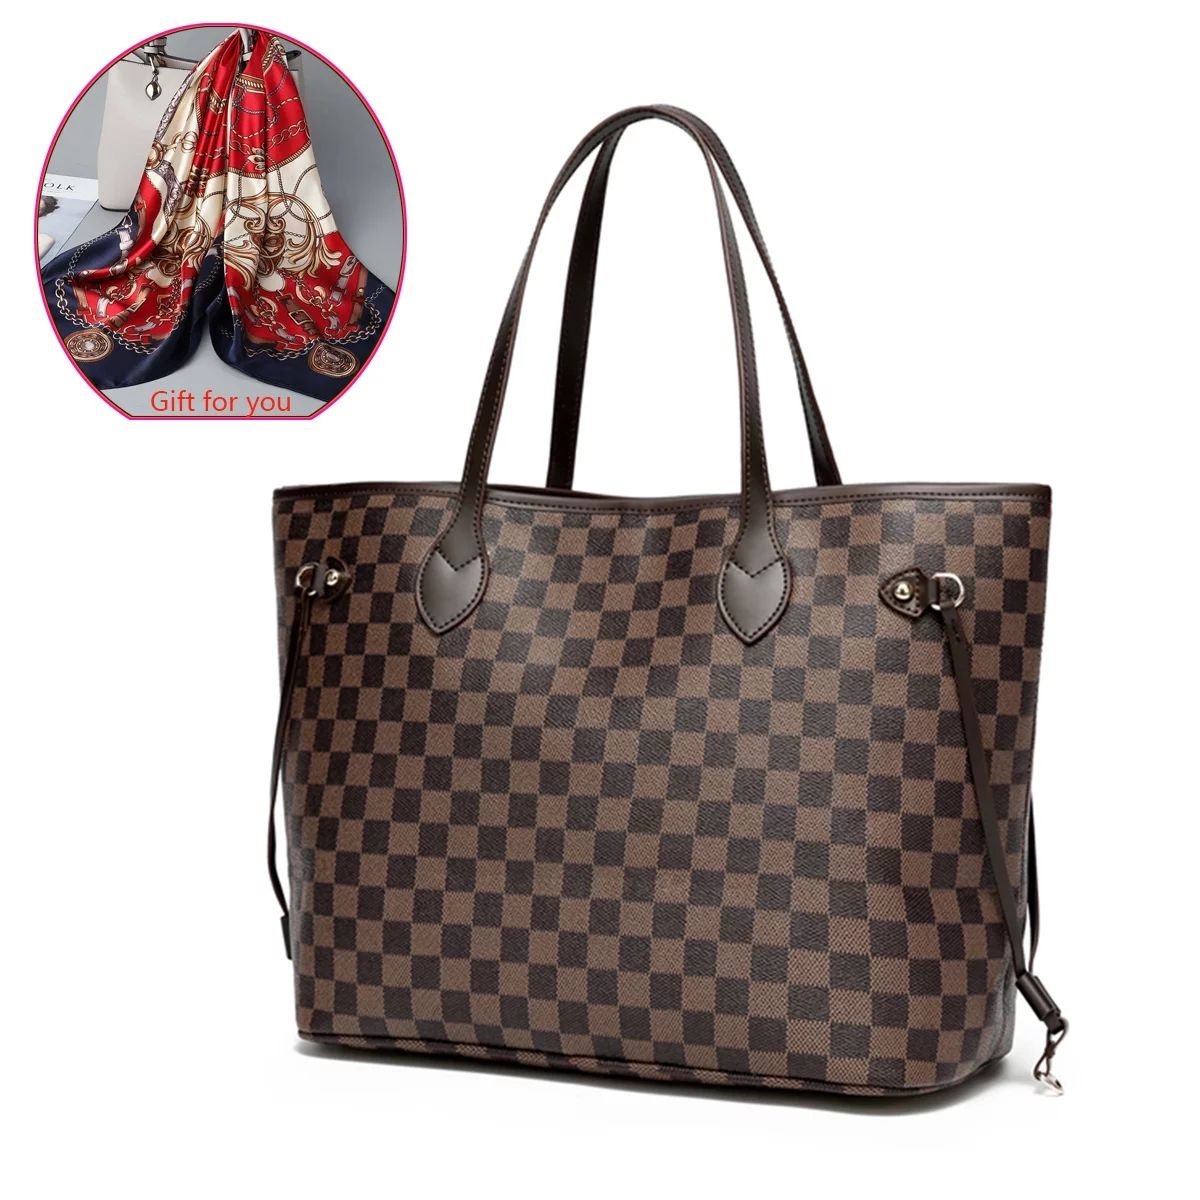 RICHPORTS 2PCS Set Womens Handbags Checkered Tote Shoulder Bag With Branded Gift | Walmart (US)